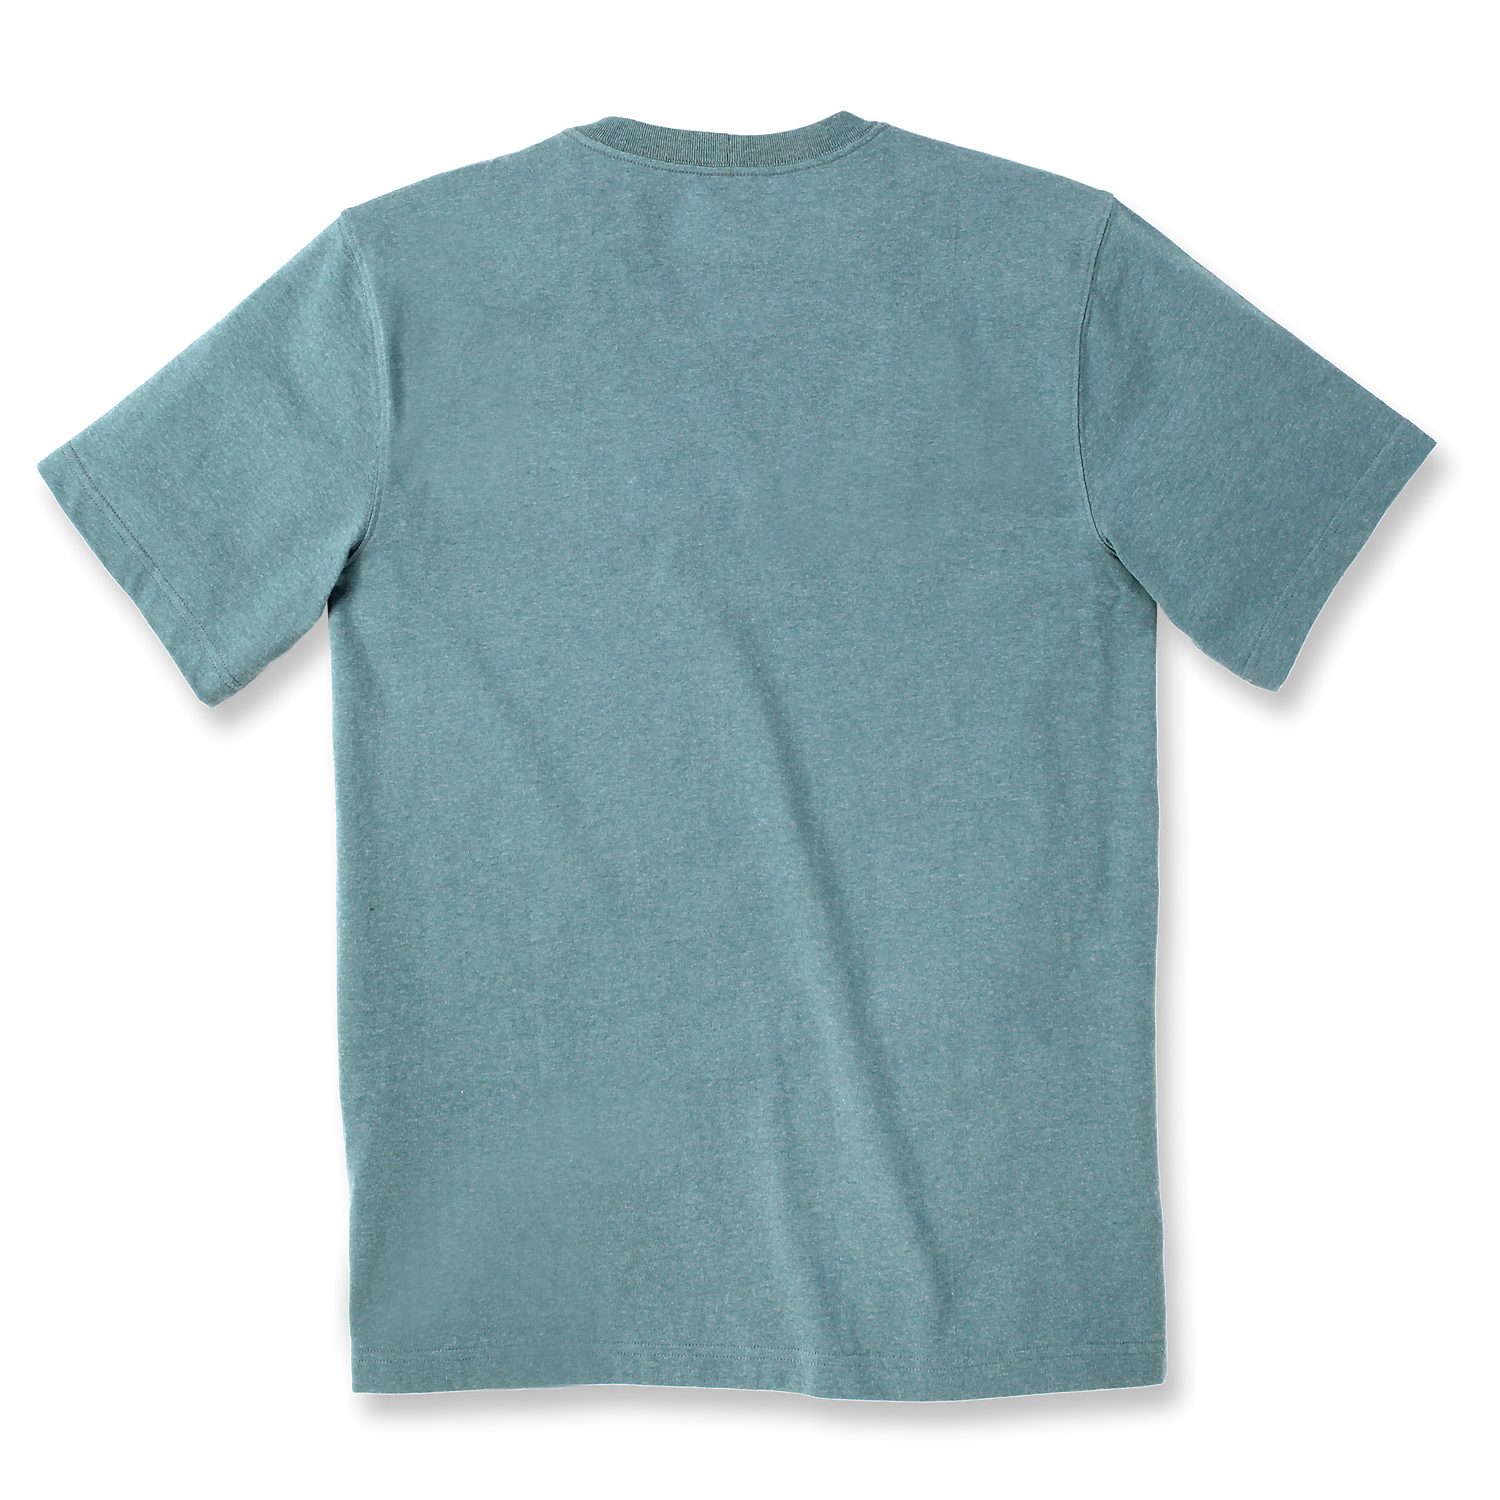 Fit K87 Pocket Sea Carhartt Pine Relaxed T-Shirt